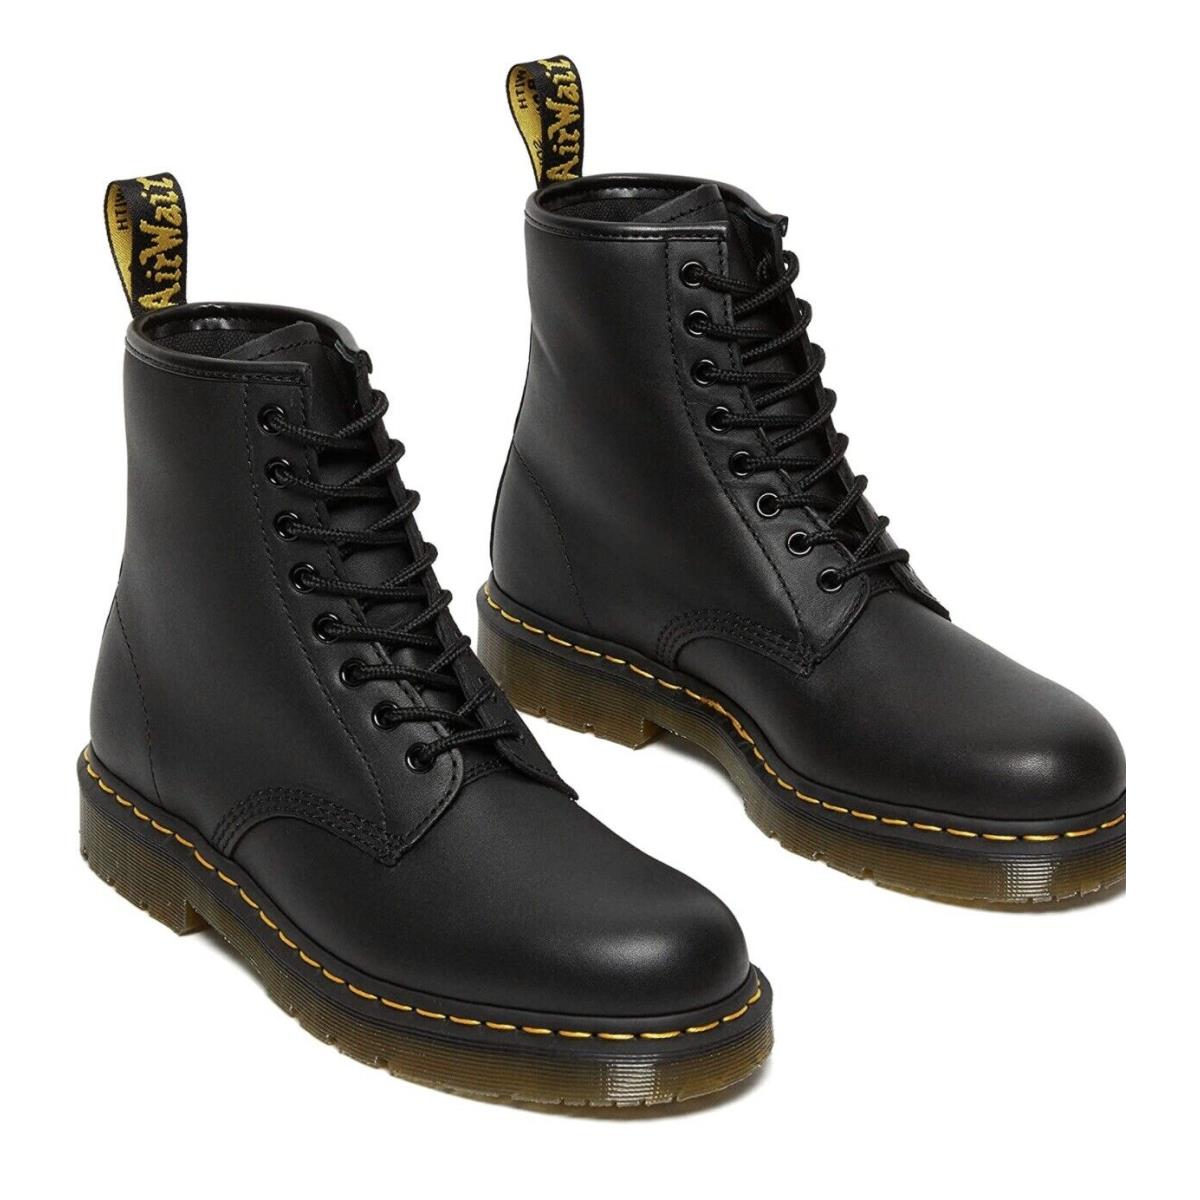 Mens 10 Women s 11 Boots Dr. Martens Industrial Black 1460 SR 24382001